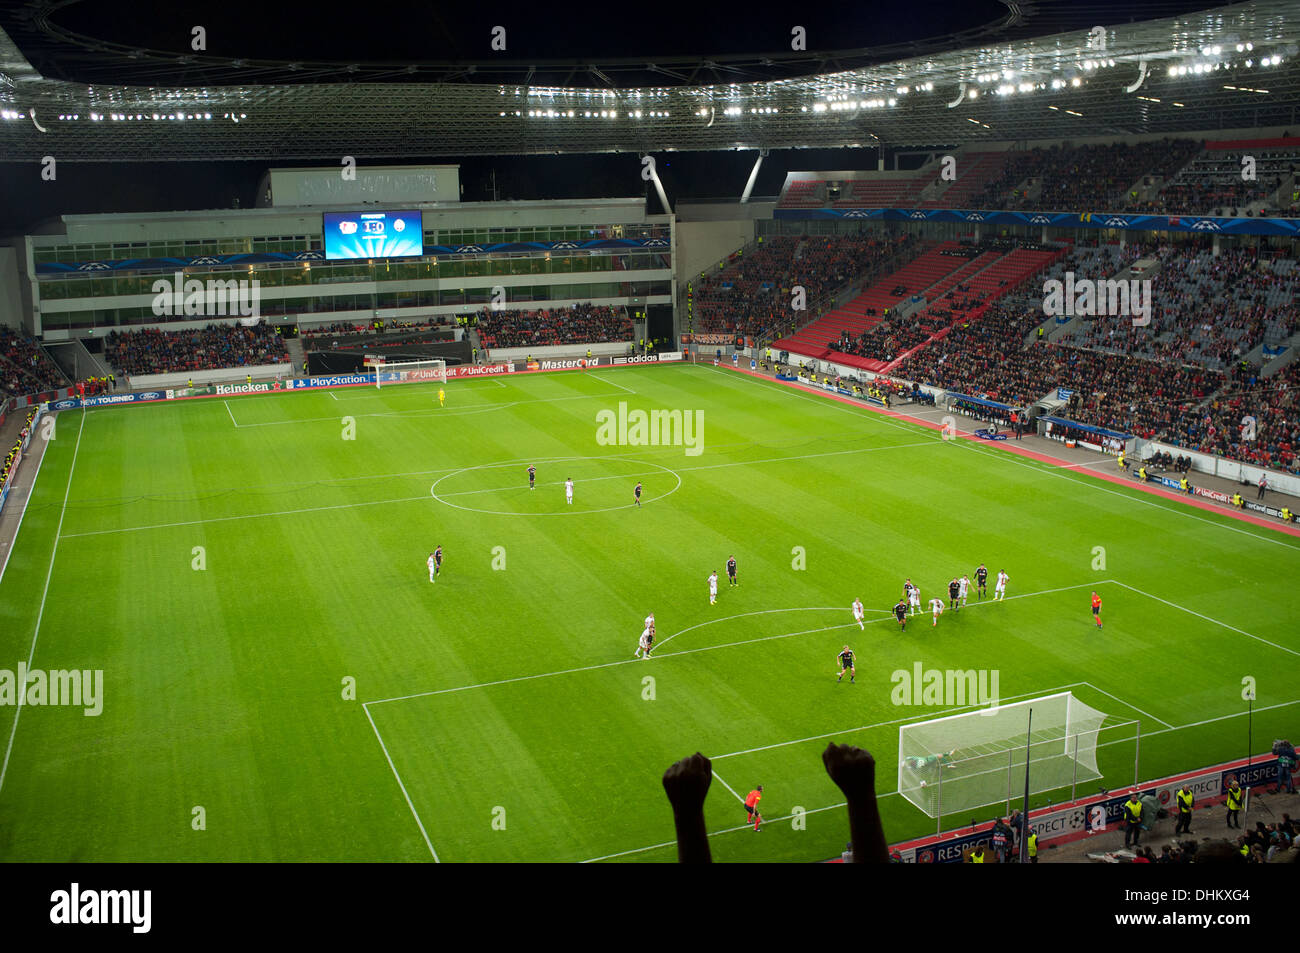 Leverkusen v Shakhtar Donetsk de la Liga de Campeones (23.10.2013) Foto de stock